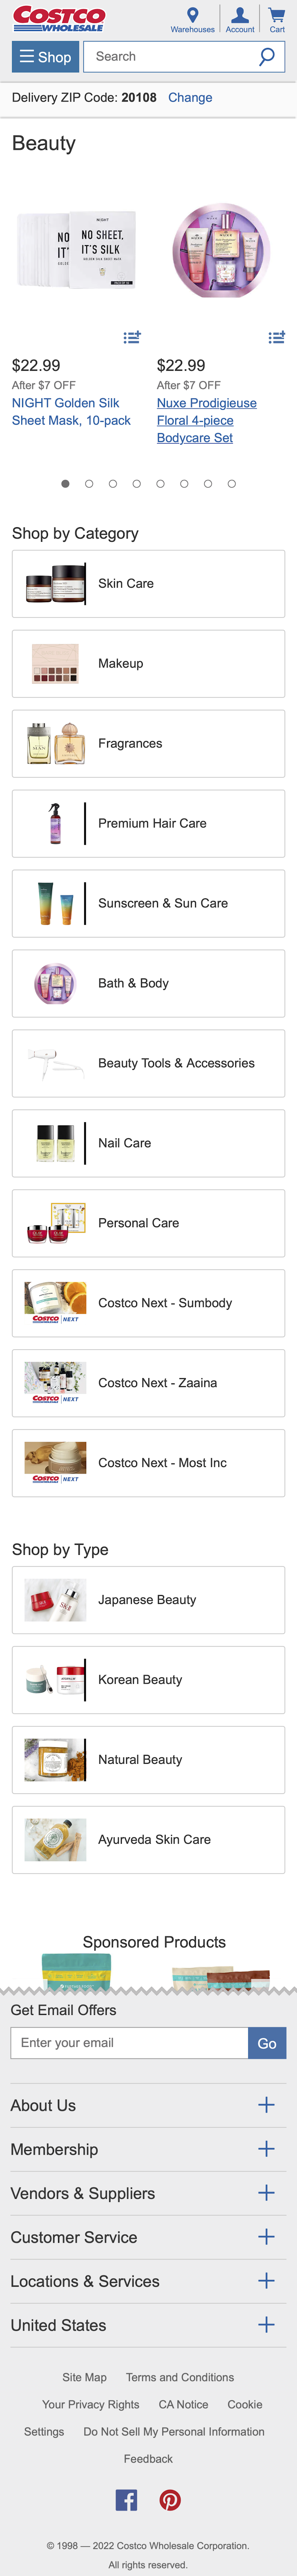 Mobile screenshot of Costco